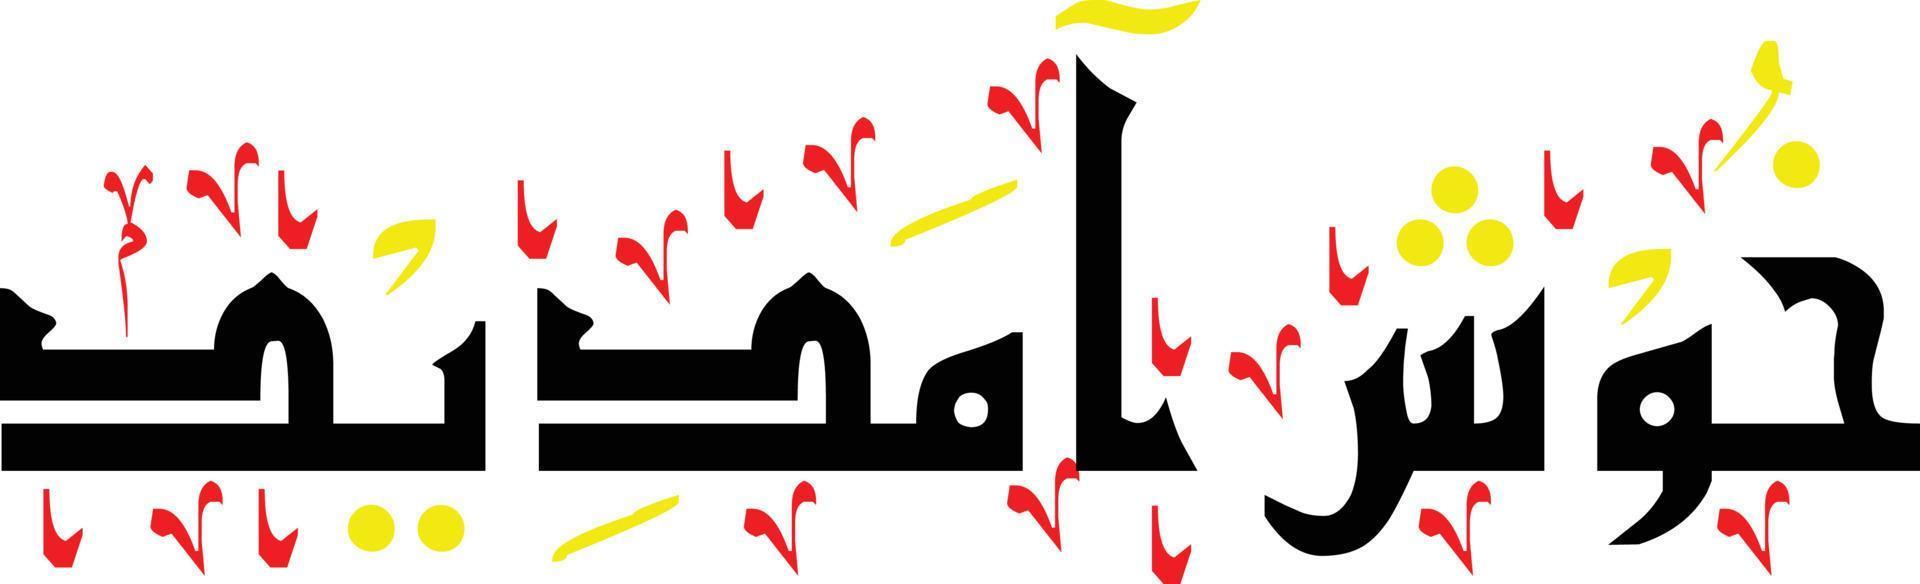 khush aamdeed handgeschriebene nastaliq urdu kalligraphie, khush amdeed 3d nastaliq kalligraphie vektorbild, arabische kalligraphie urdu arabische schriftart, urdu arabische lettring,, khush amdeed png bild, vektor